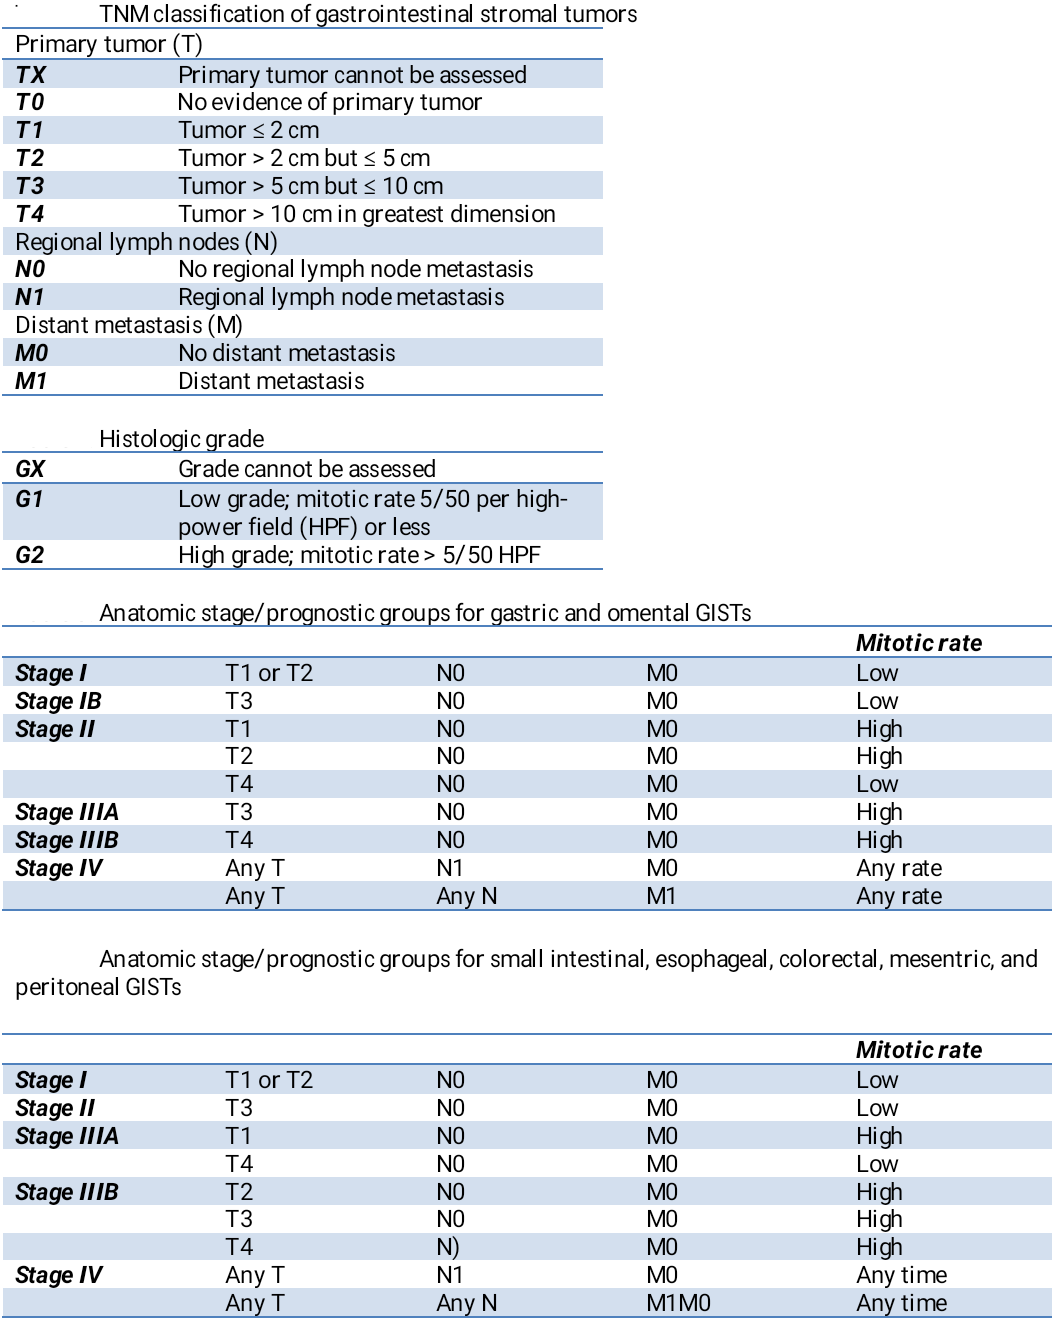 <p>TNM Classification of GI Stromal Tumors. Histologic Grade, Anatomic Stage/Prognostics, Anatomic Stage/Prognostics</p>